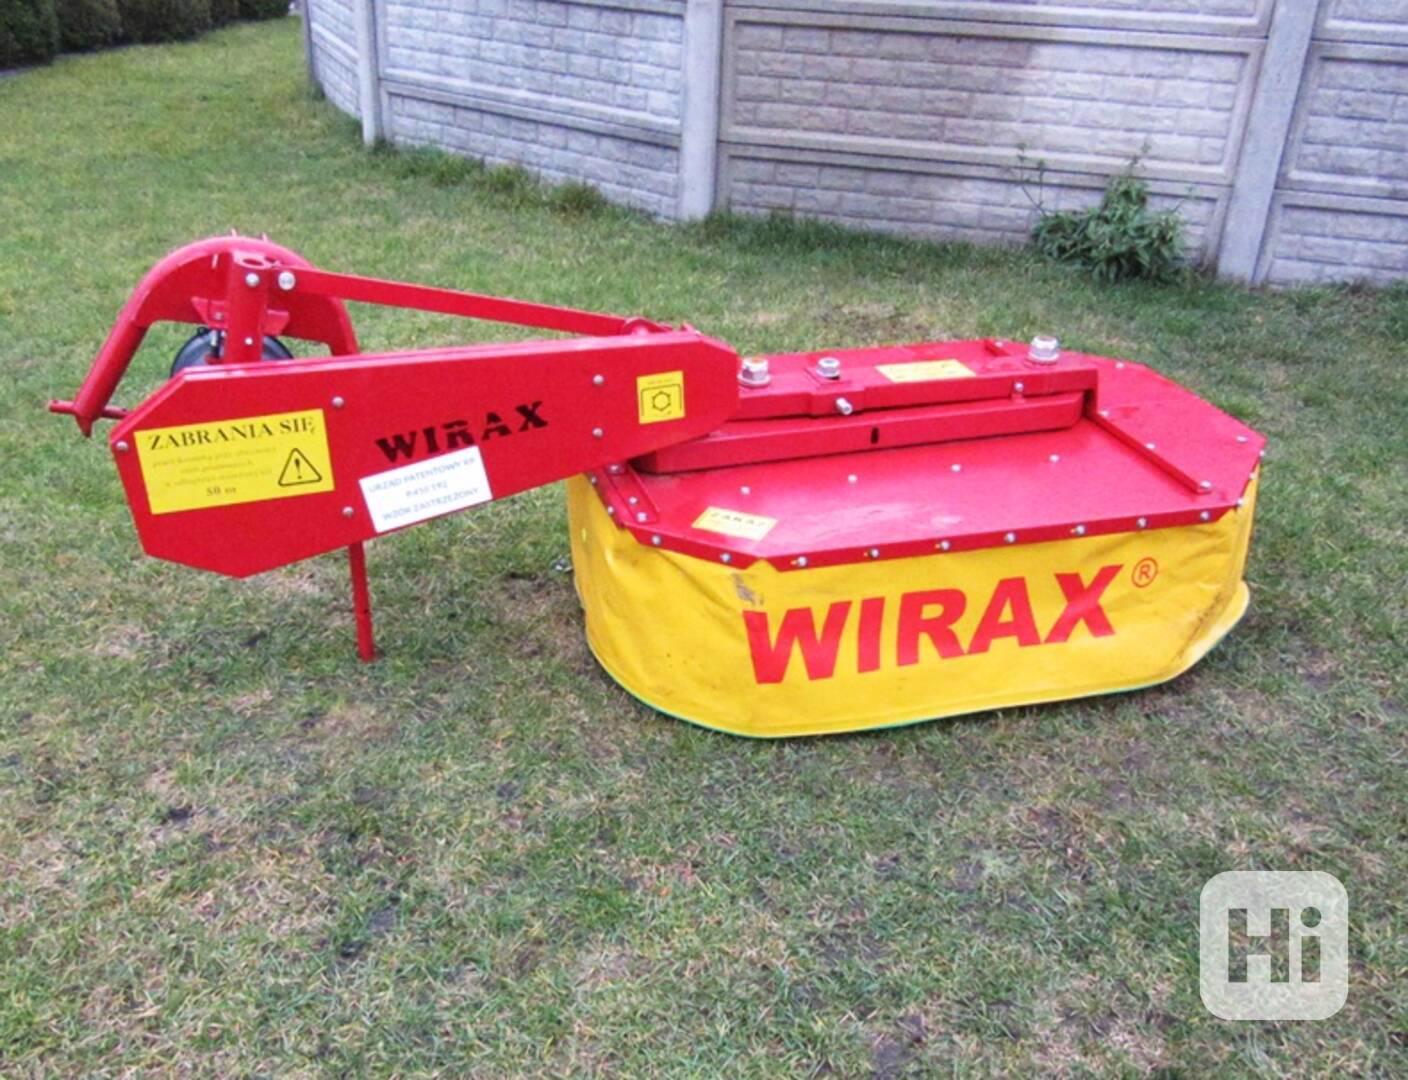 WIRAX - Prodam zadni sekacku - rotacku k malotraktoru - foto 1